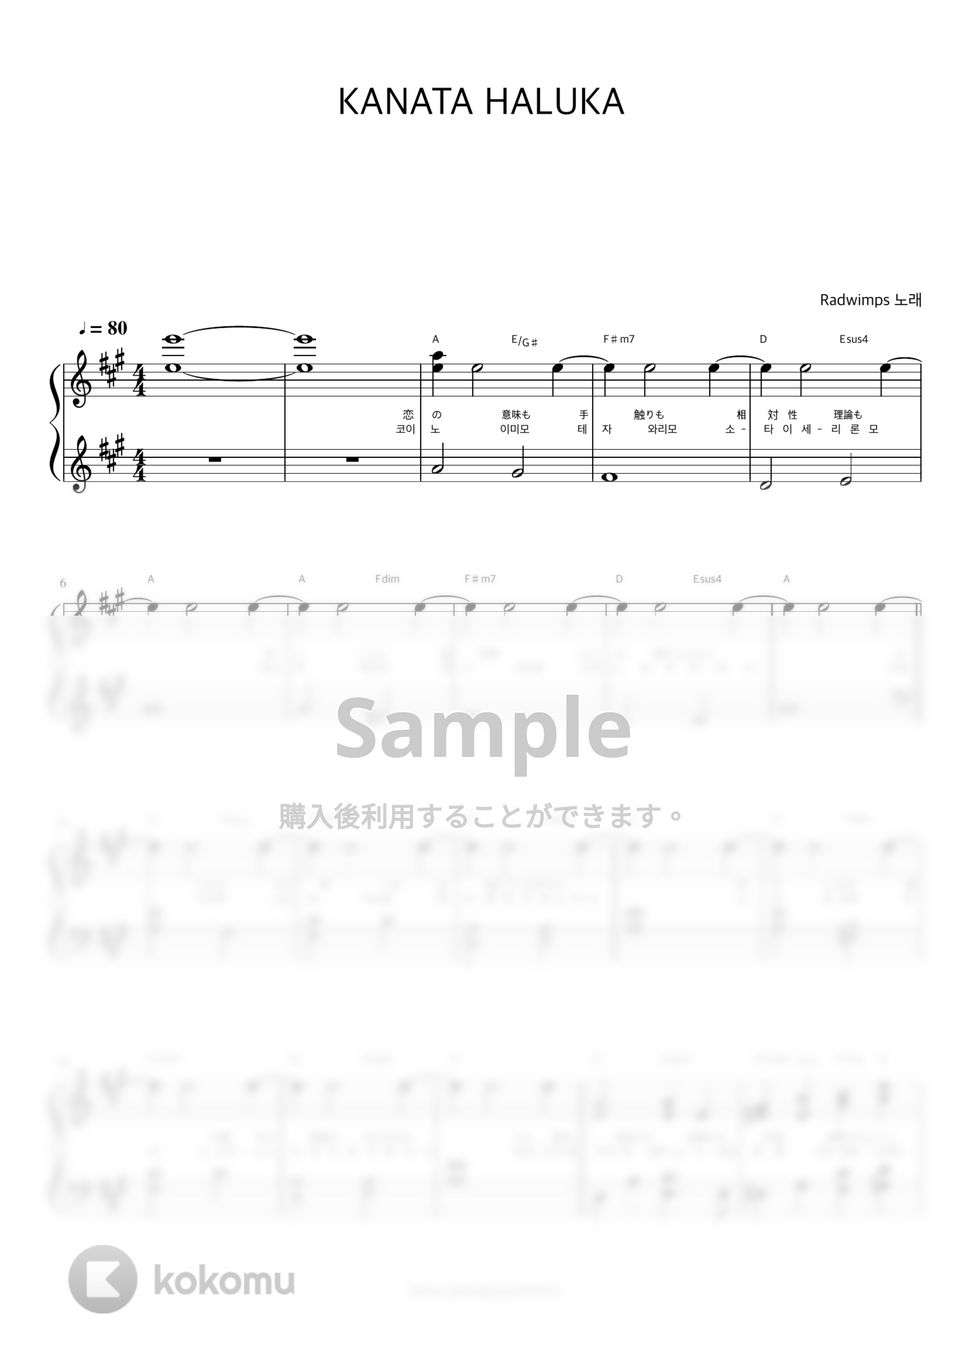 RADWIMPS - カナタハルカ (伴奏楽譜) by 피아노정류장